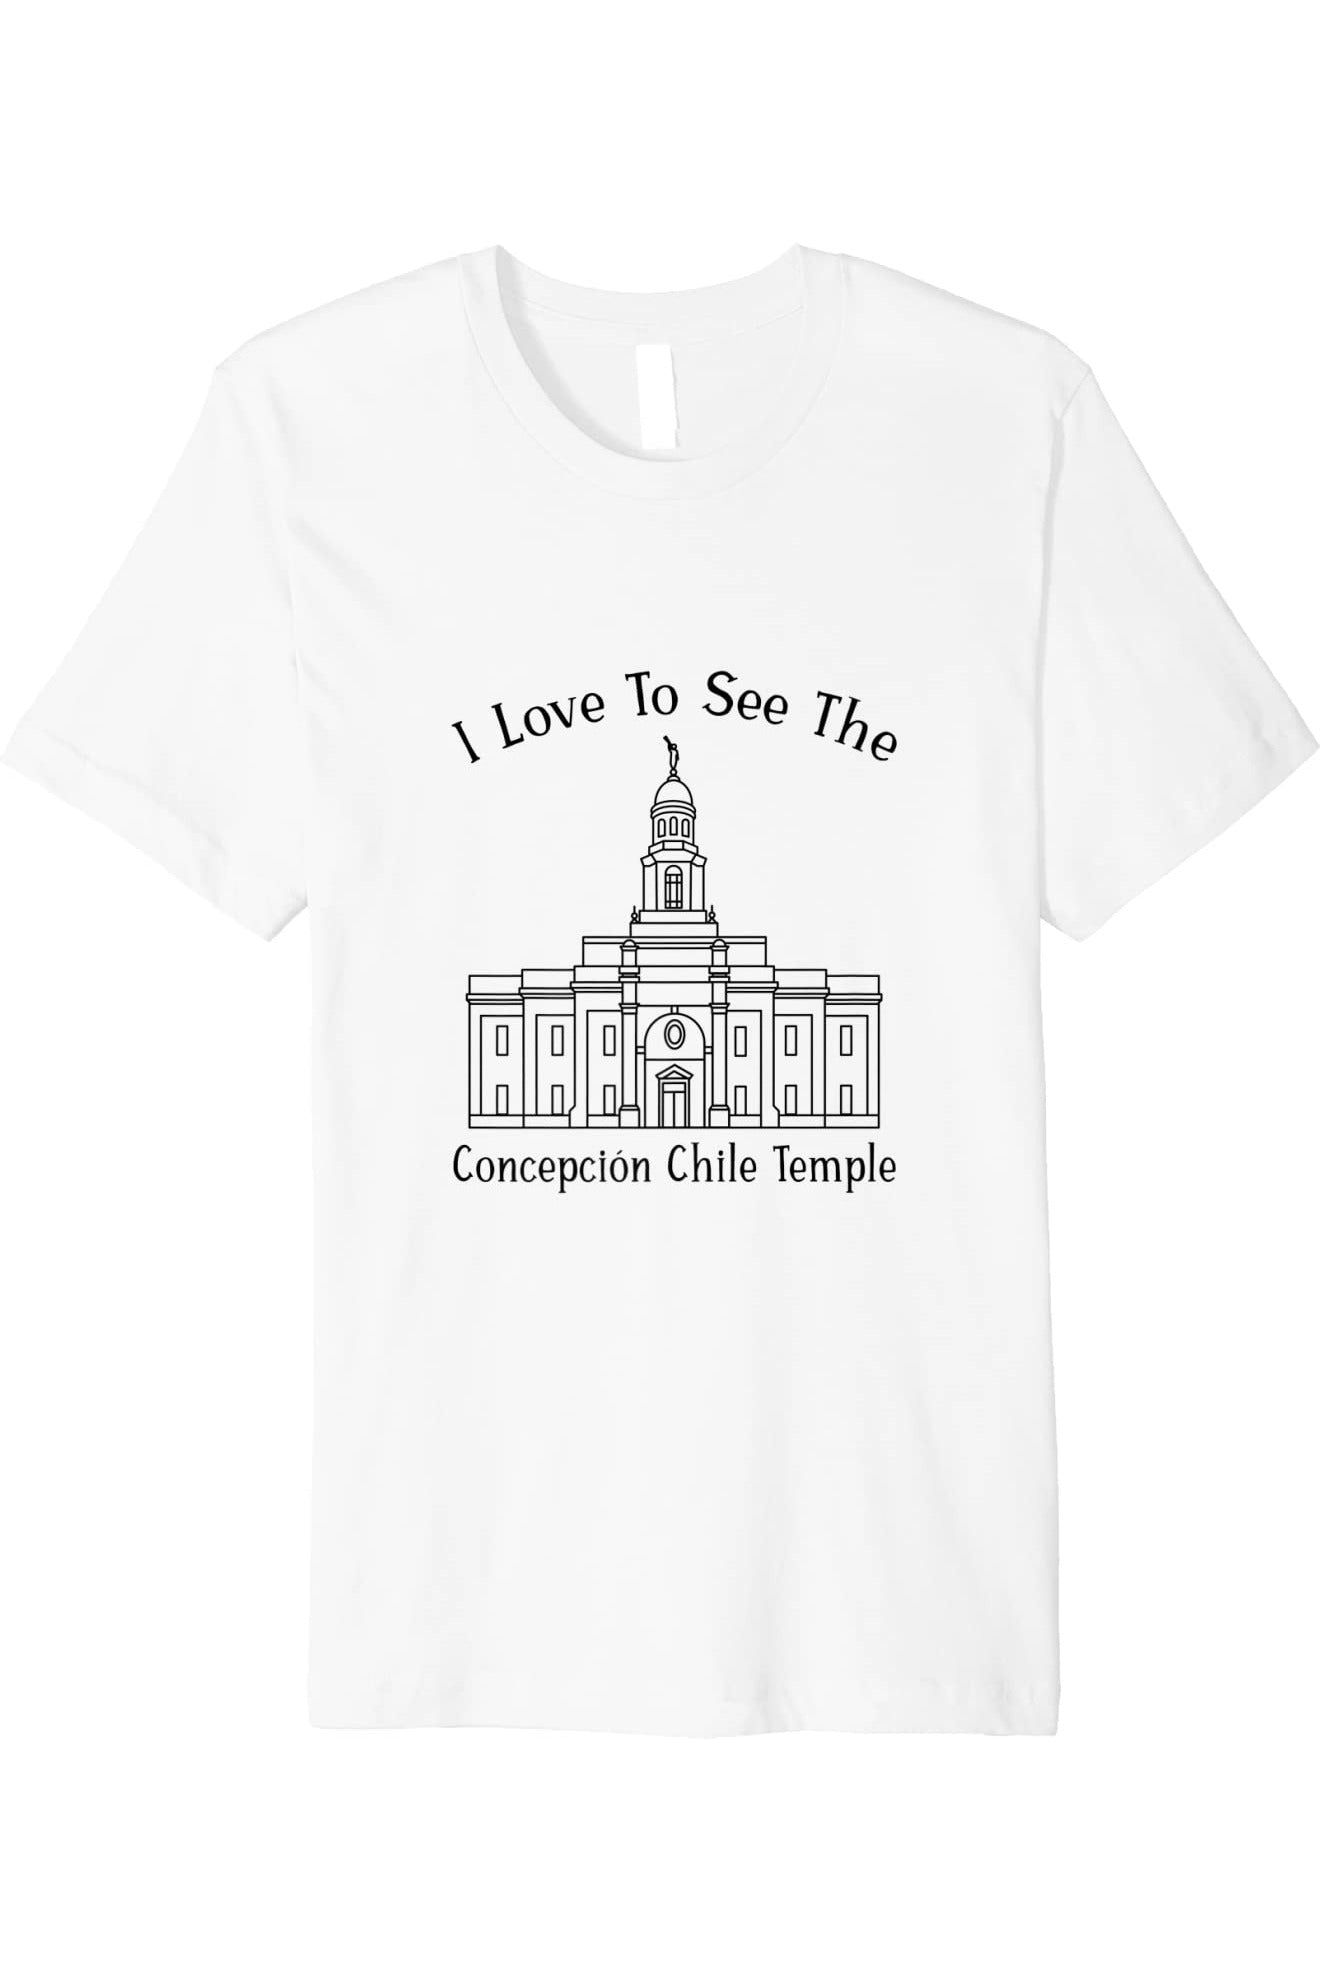 Concepcion Chile Temple T-Shirt - Premium - Happy Style (English) US